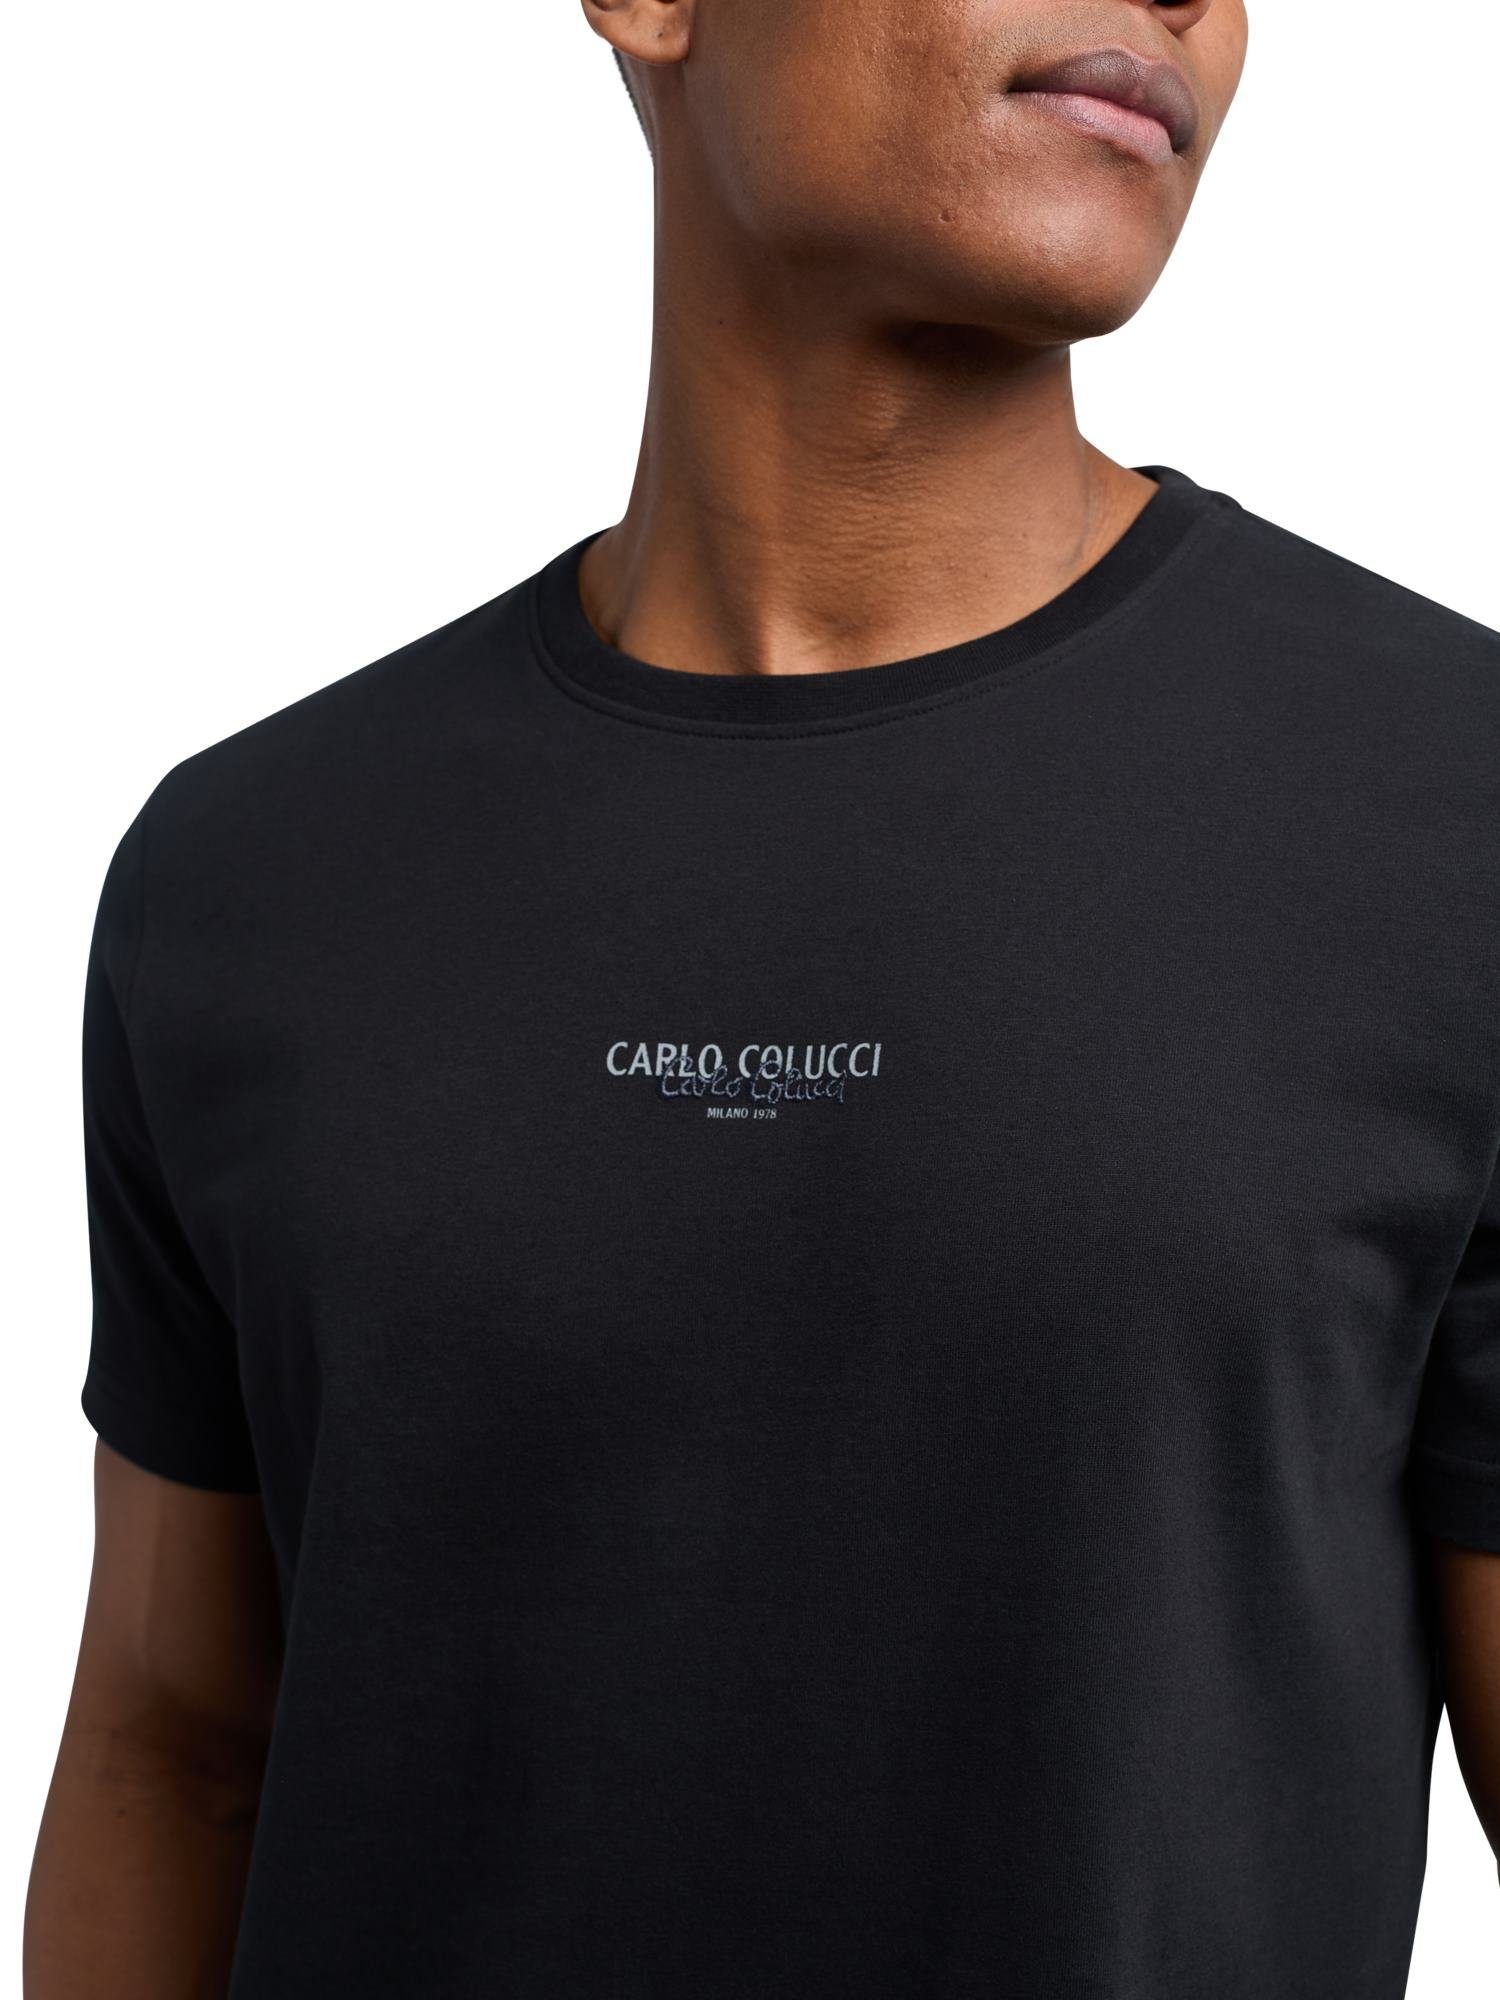 CARLO De Salvador COLUCCI T-Shirt Schwarz